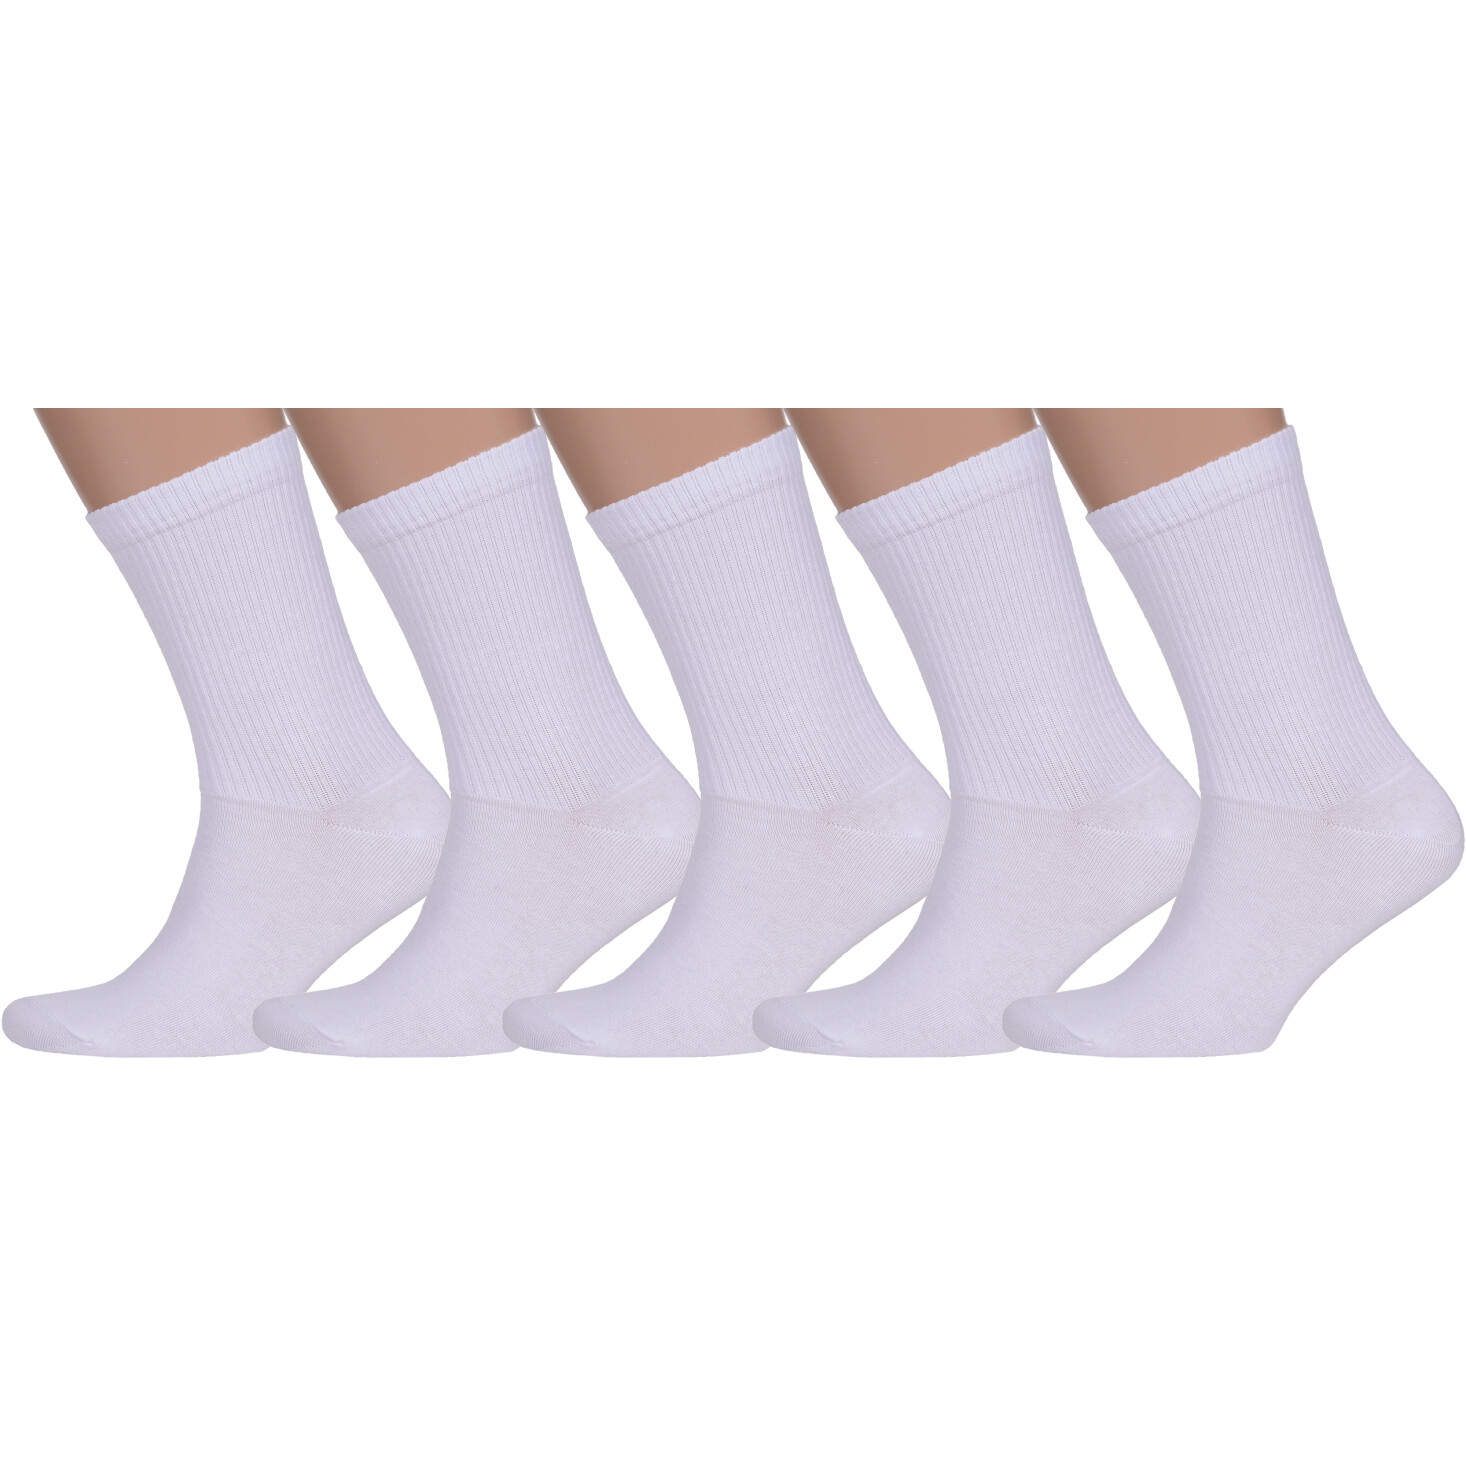 Комплект носков мужских VIRTUOSO 5-nm-50 белых 27 5 пар